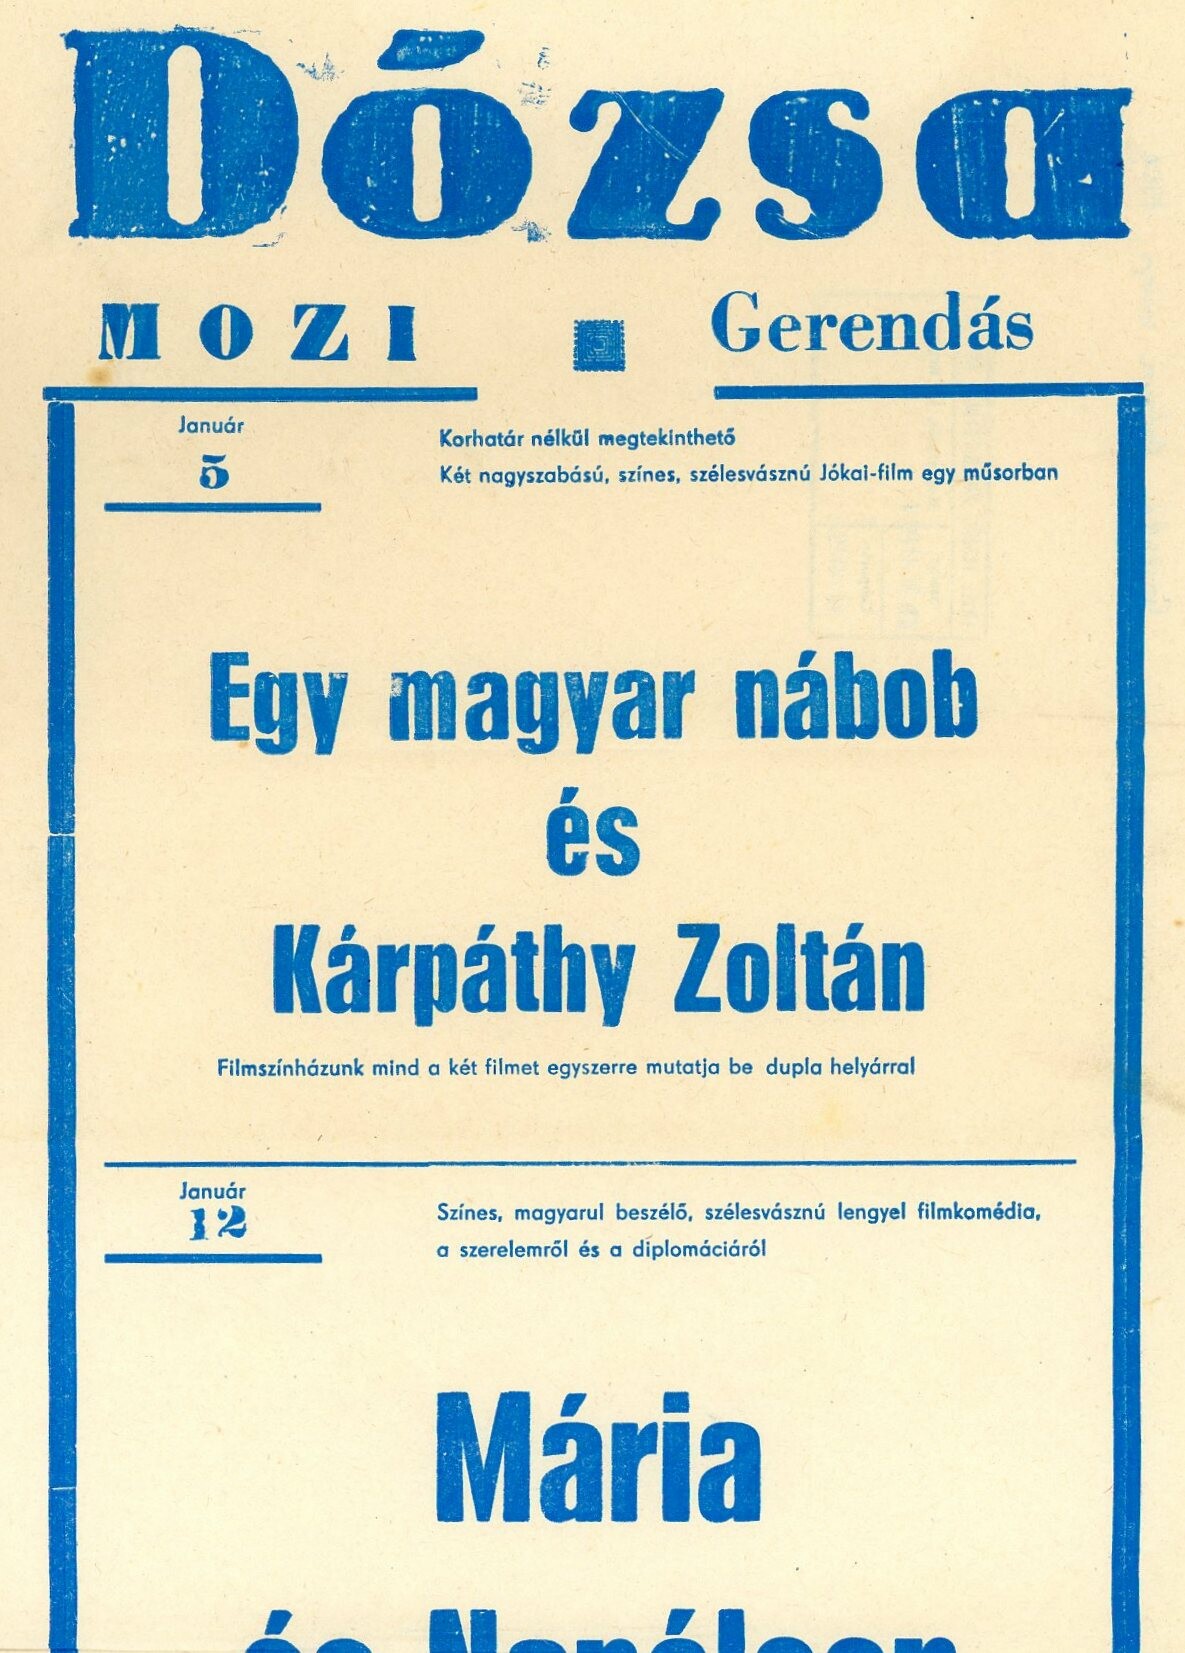 mozi plakát (Erkel Ferenc Múzeum CC BY-NC-SA)